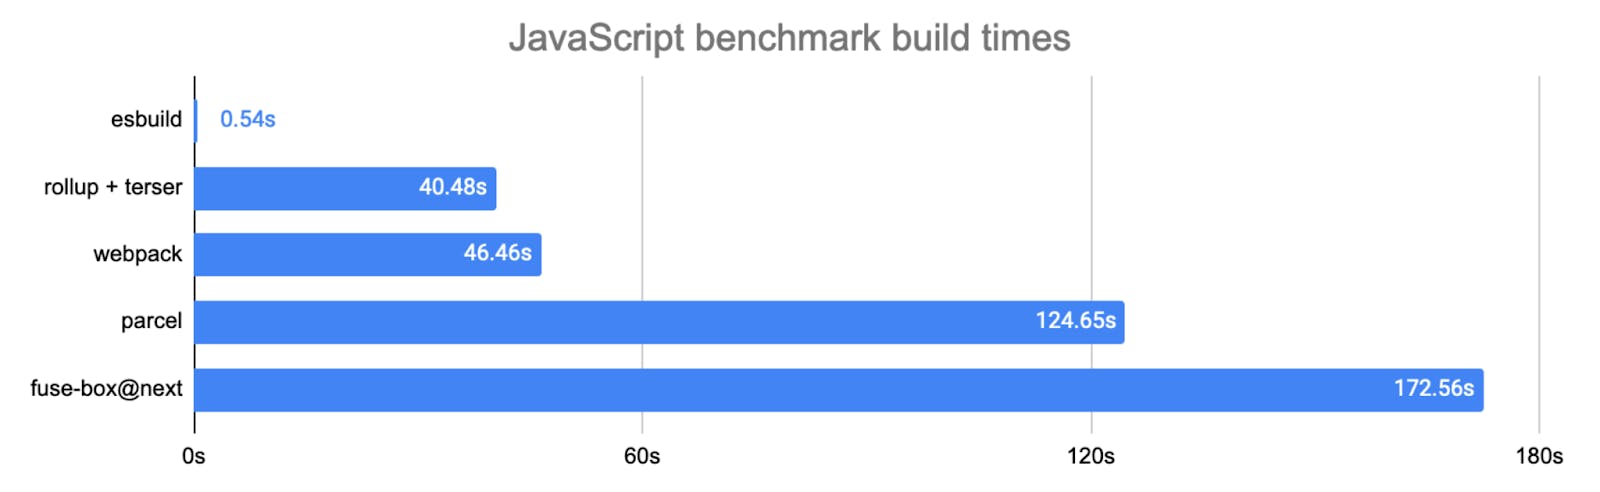 JavaScript-Benchmark-Build-Times.png